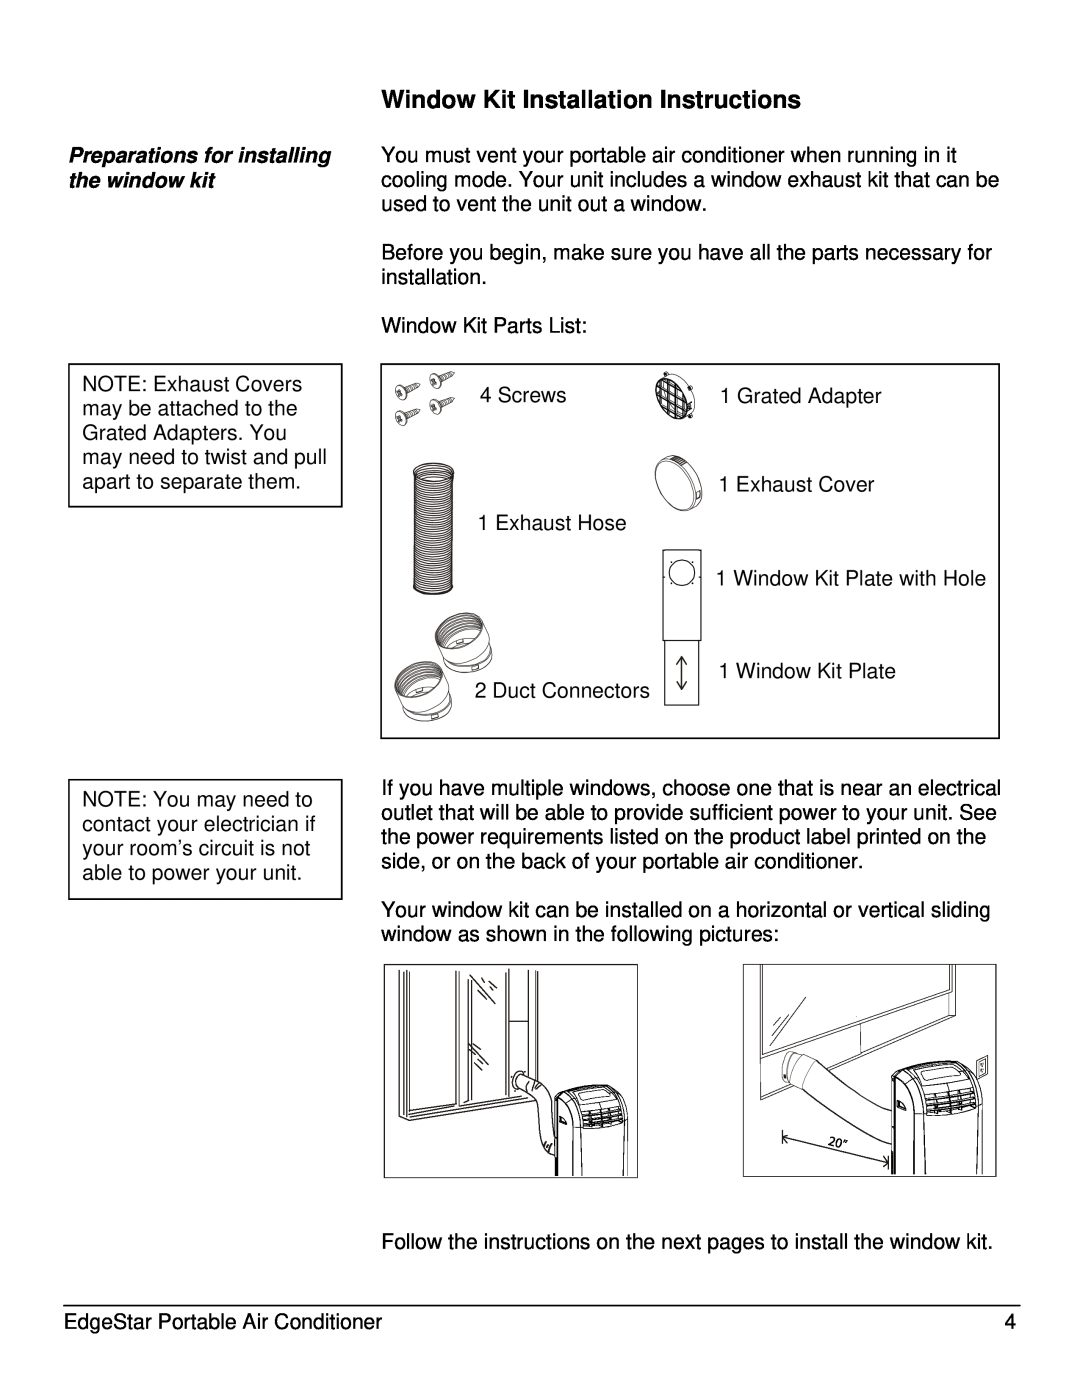 EdgeStar AP12000S-1 owner manual Window Kit Installation Instructions, Preparations for installing the window kit 